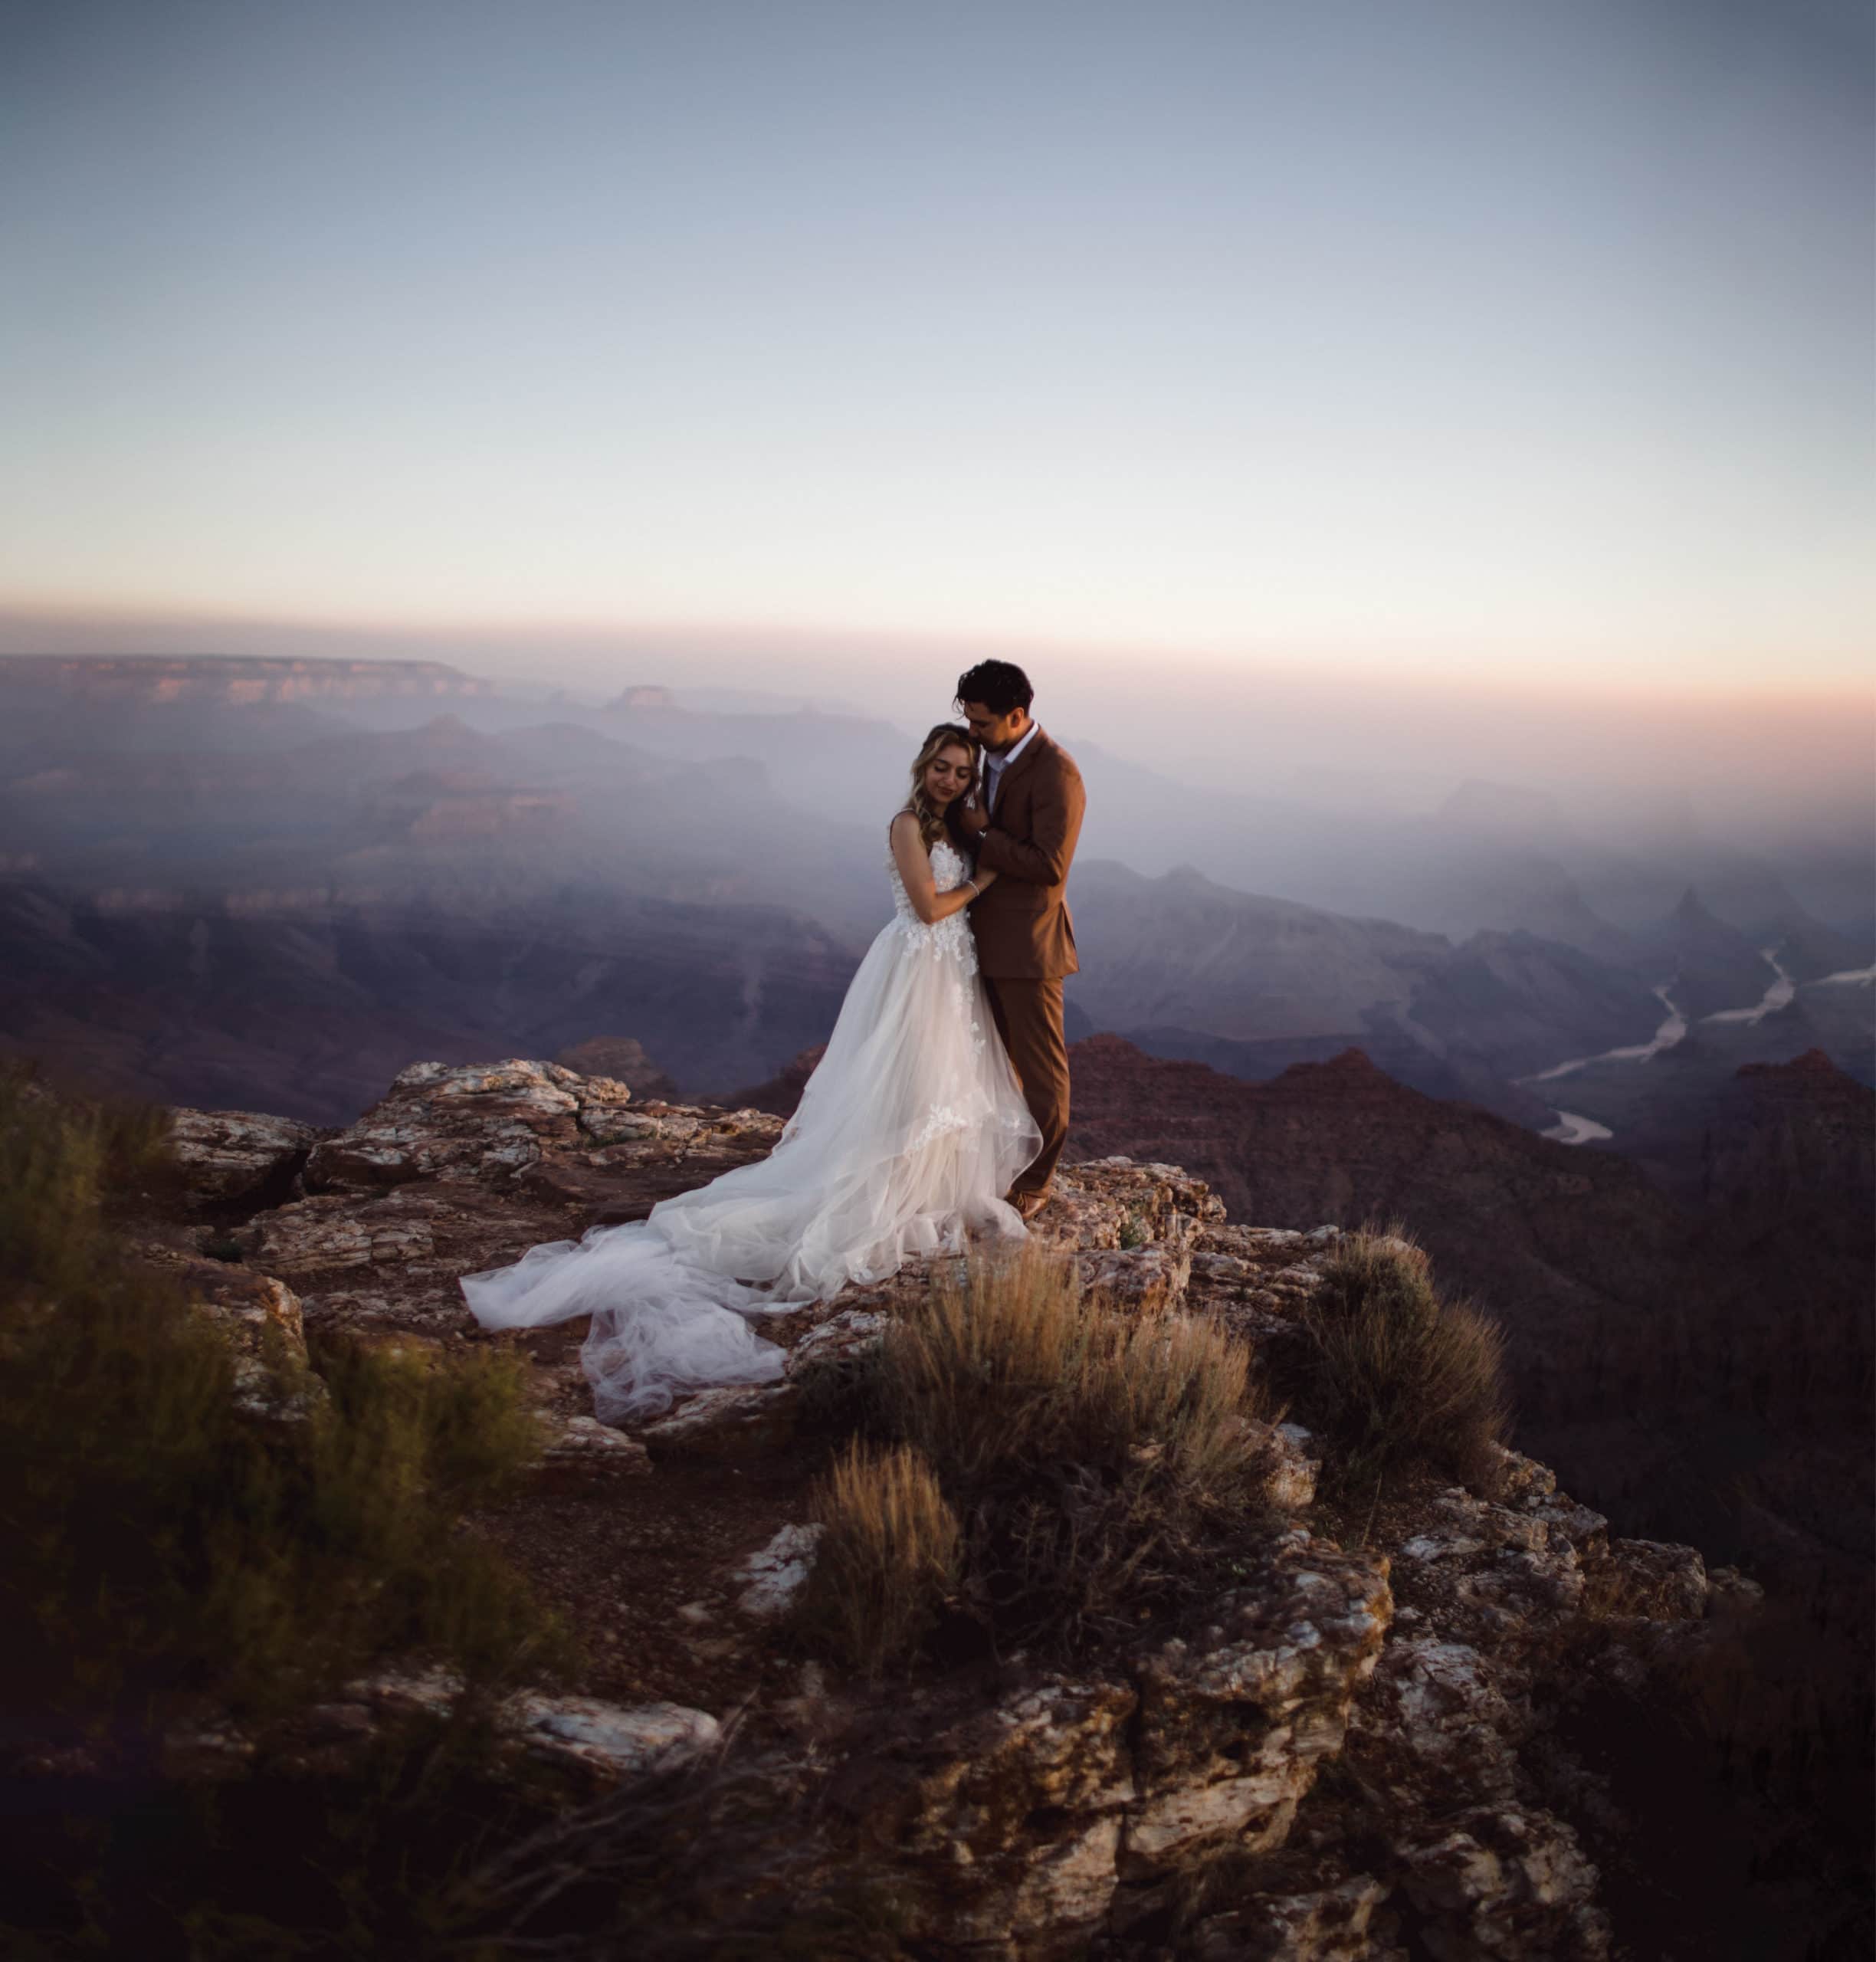 A destination wedding by a grand canyon elopement photographer.